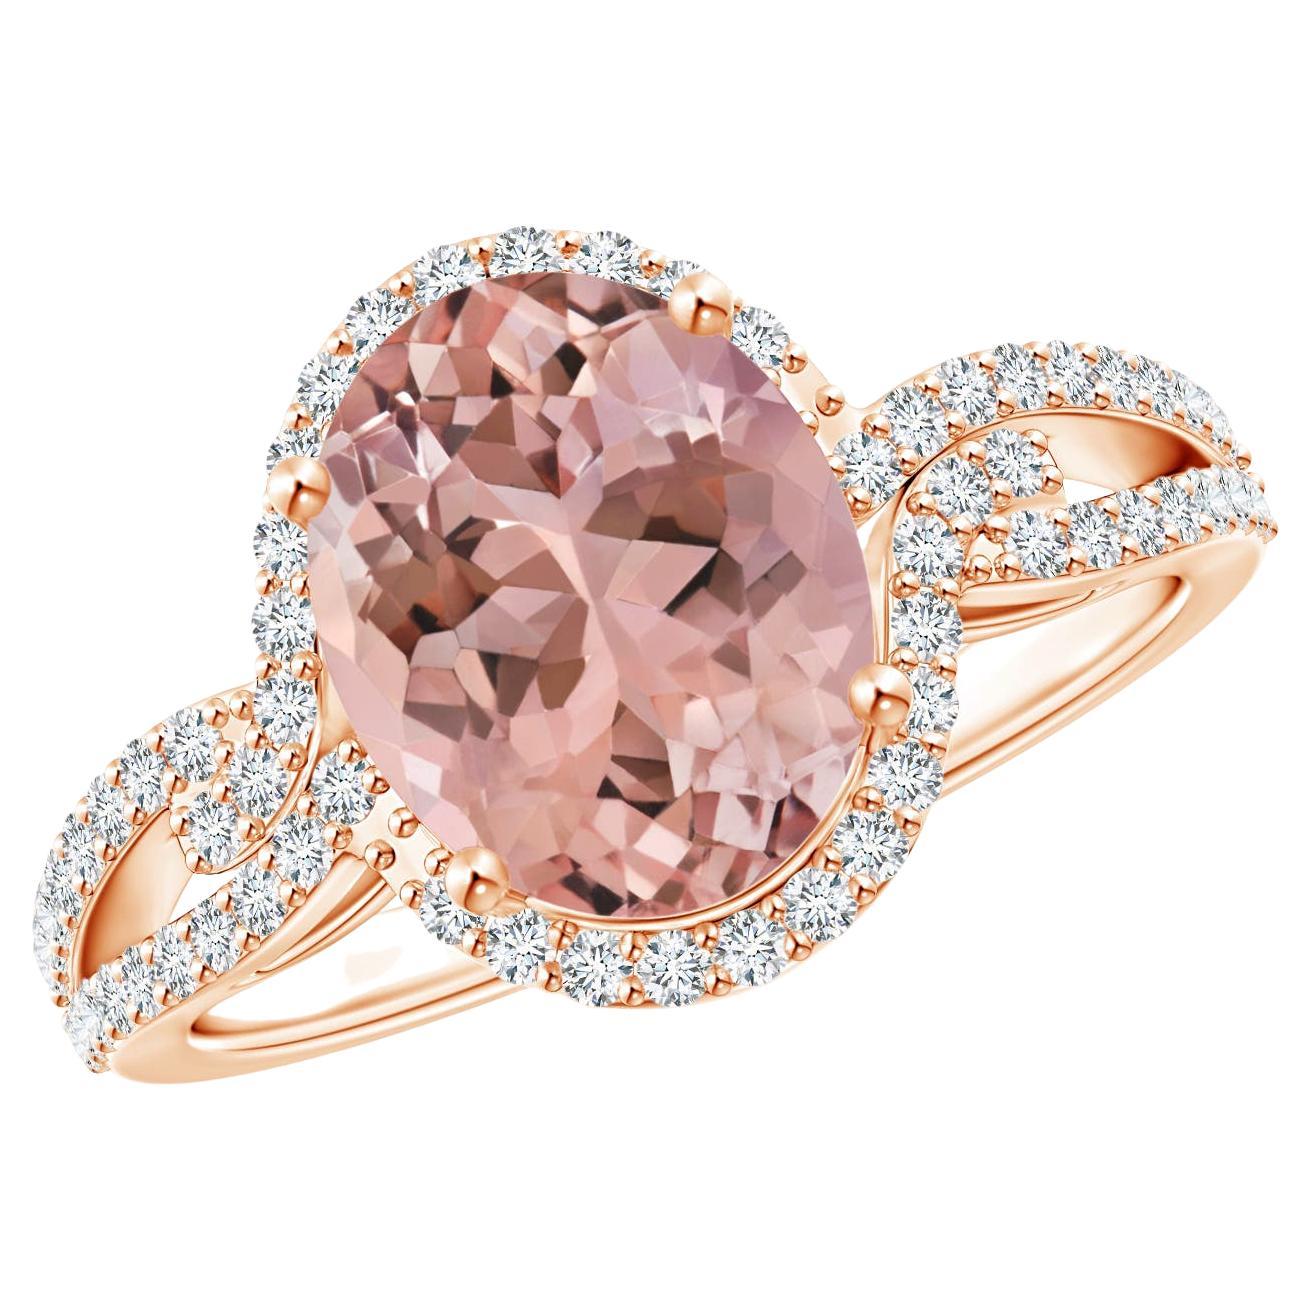 En vente :  ANGARA Bague en or rose et morganite ovale certifiée GIA avec halo de diamants